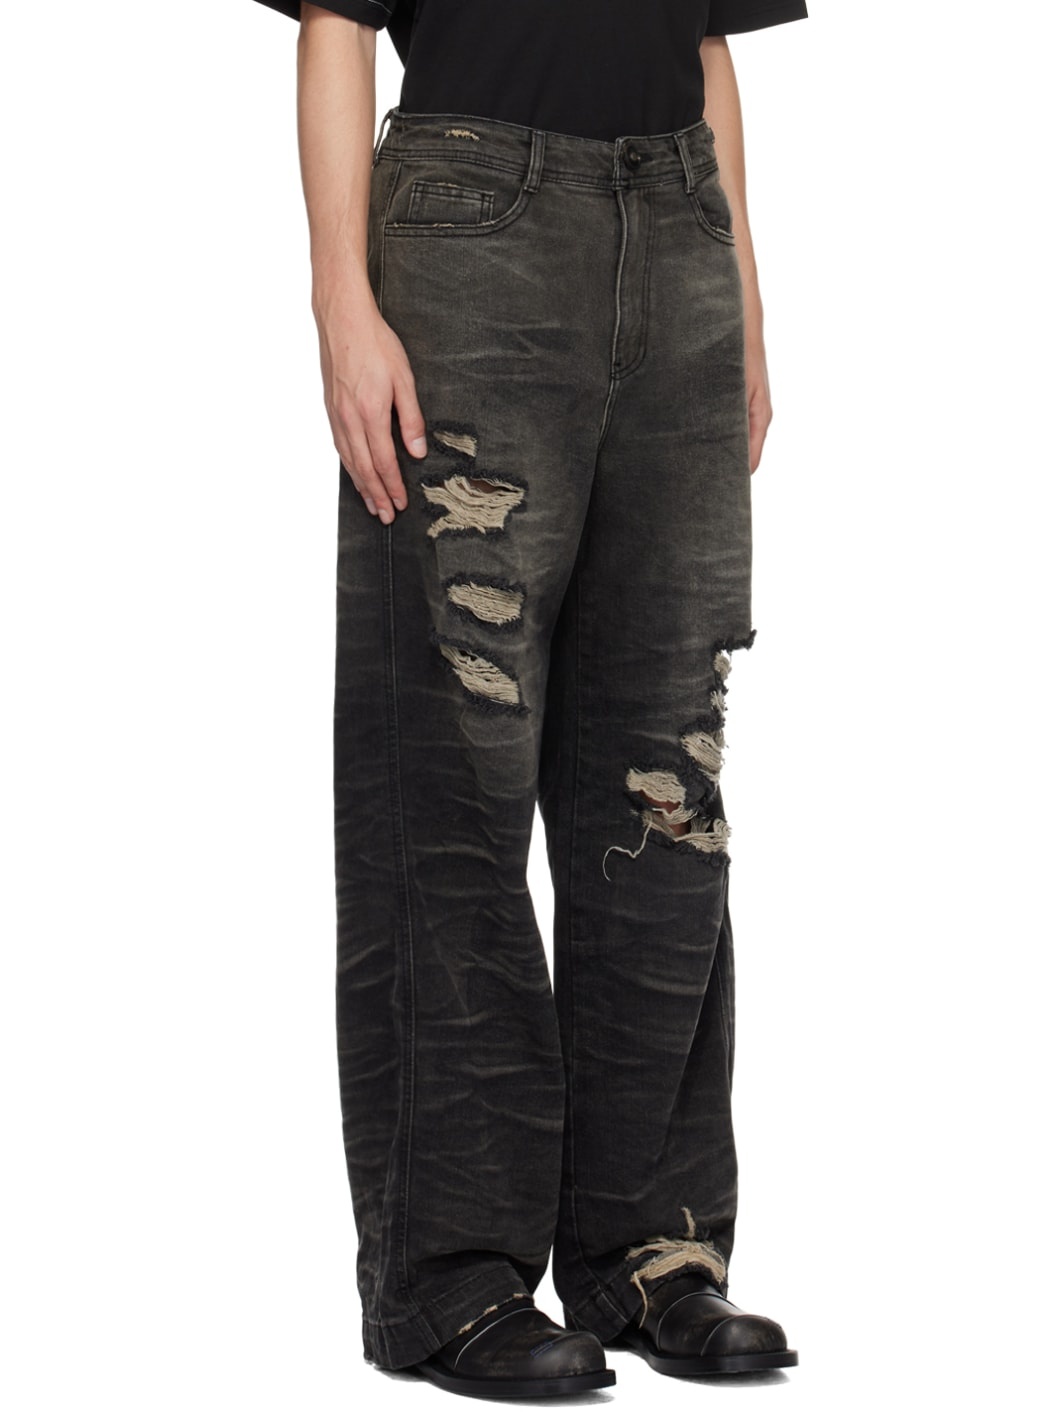 Black Distressed Jeans - 2